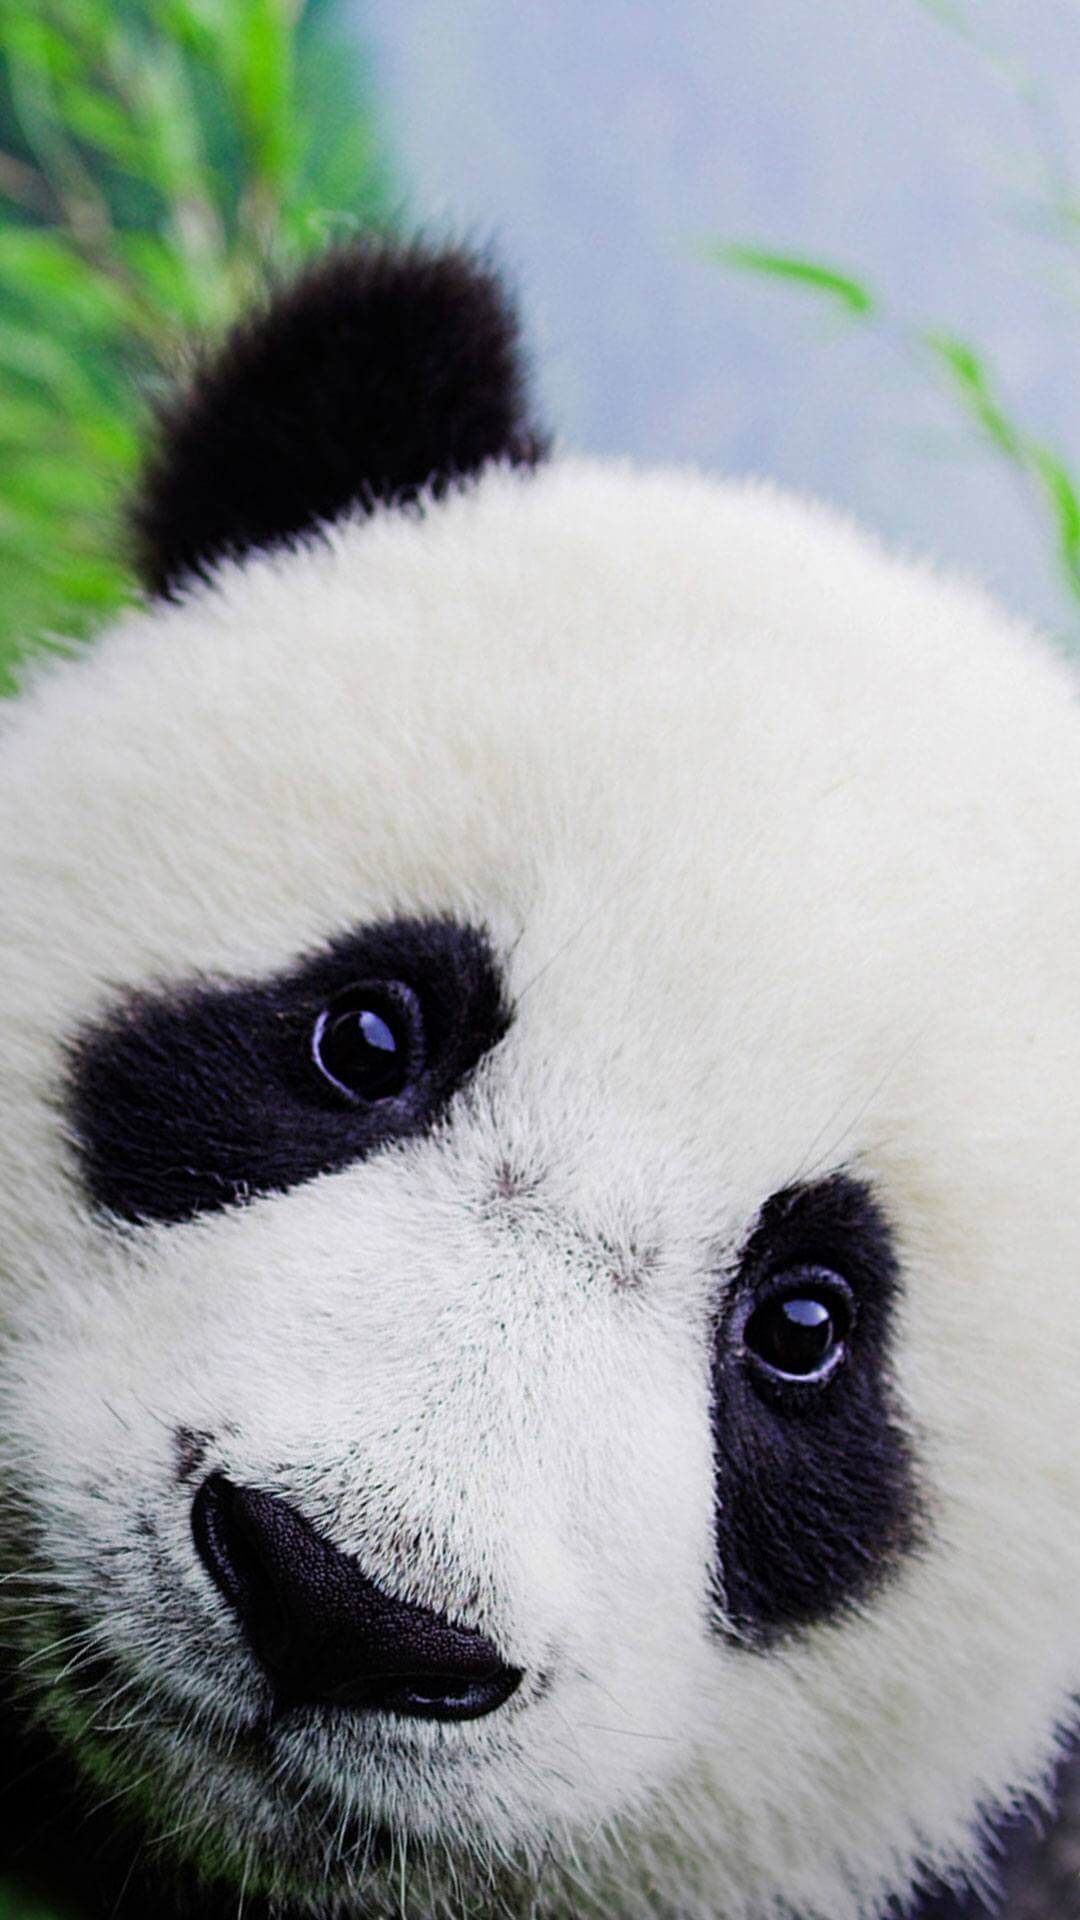 Cute Baby Panda Wallpaper For iPhone HD. Cute baby animals